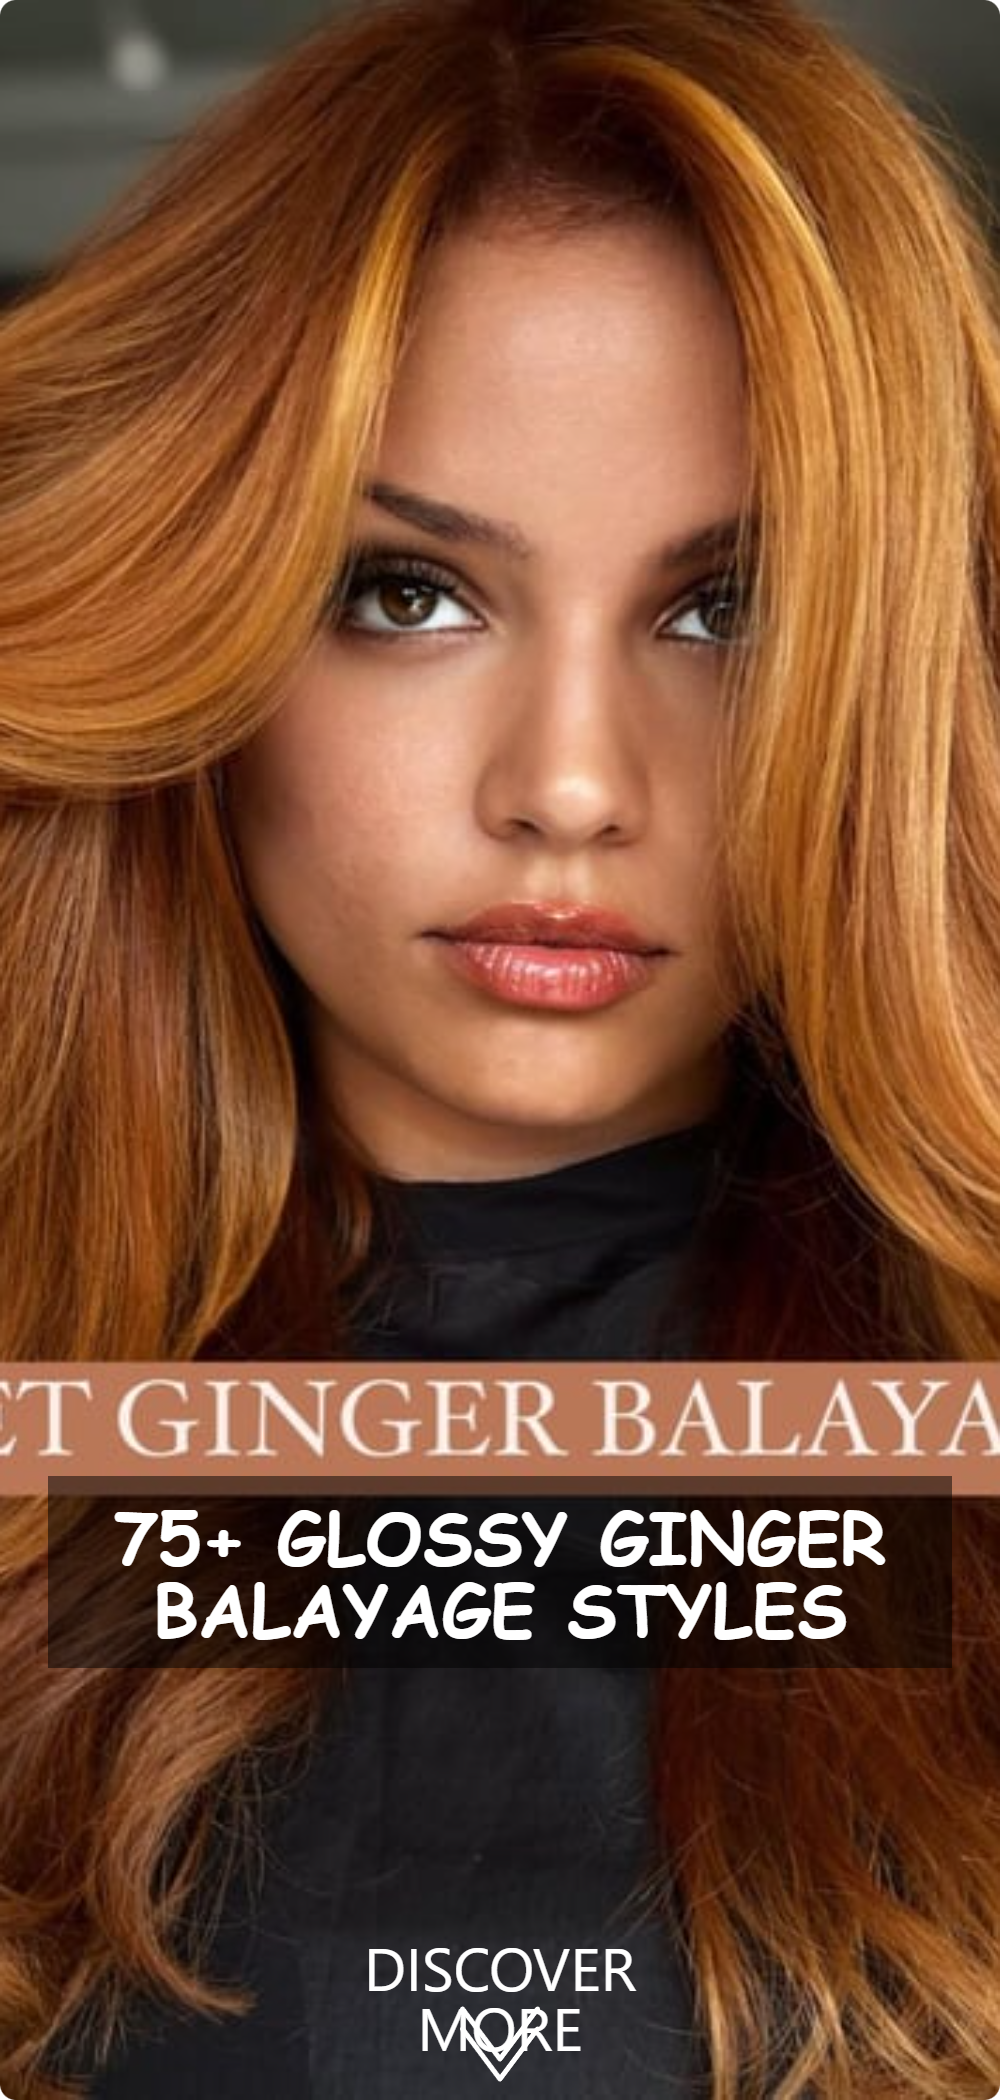 Glossy Ginger Balayage